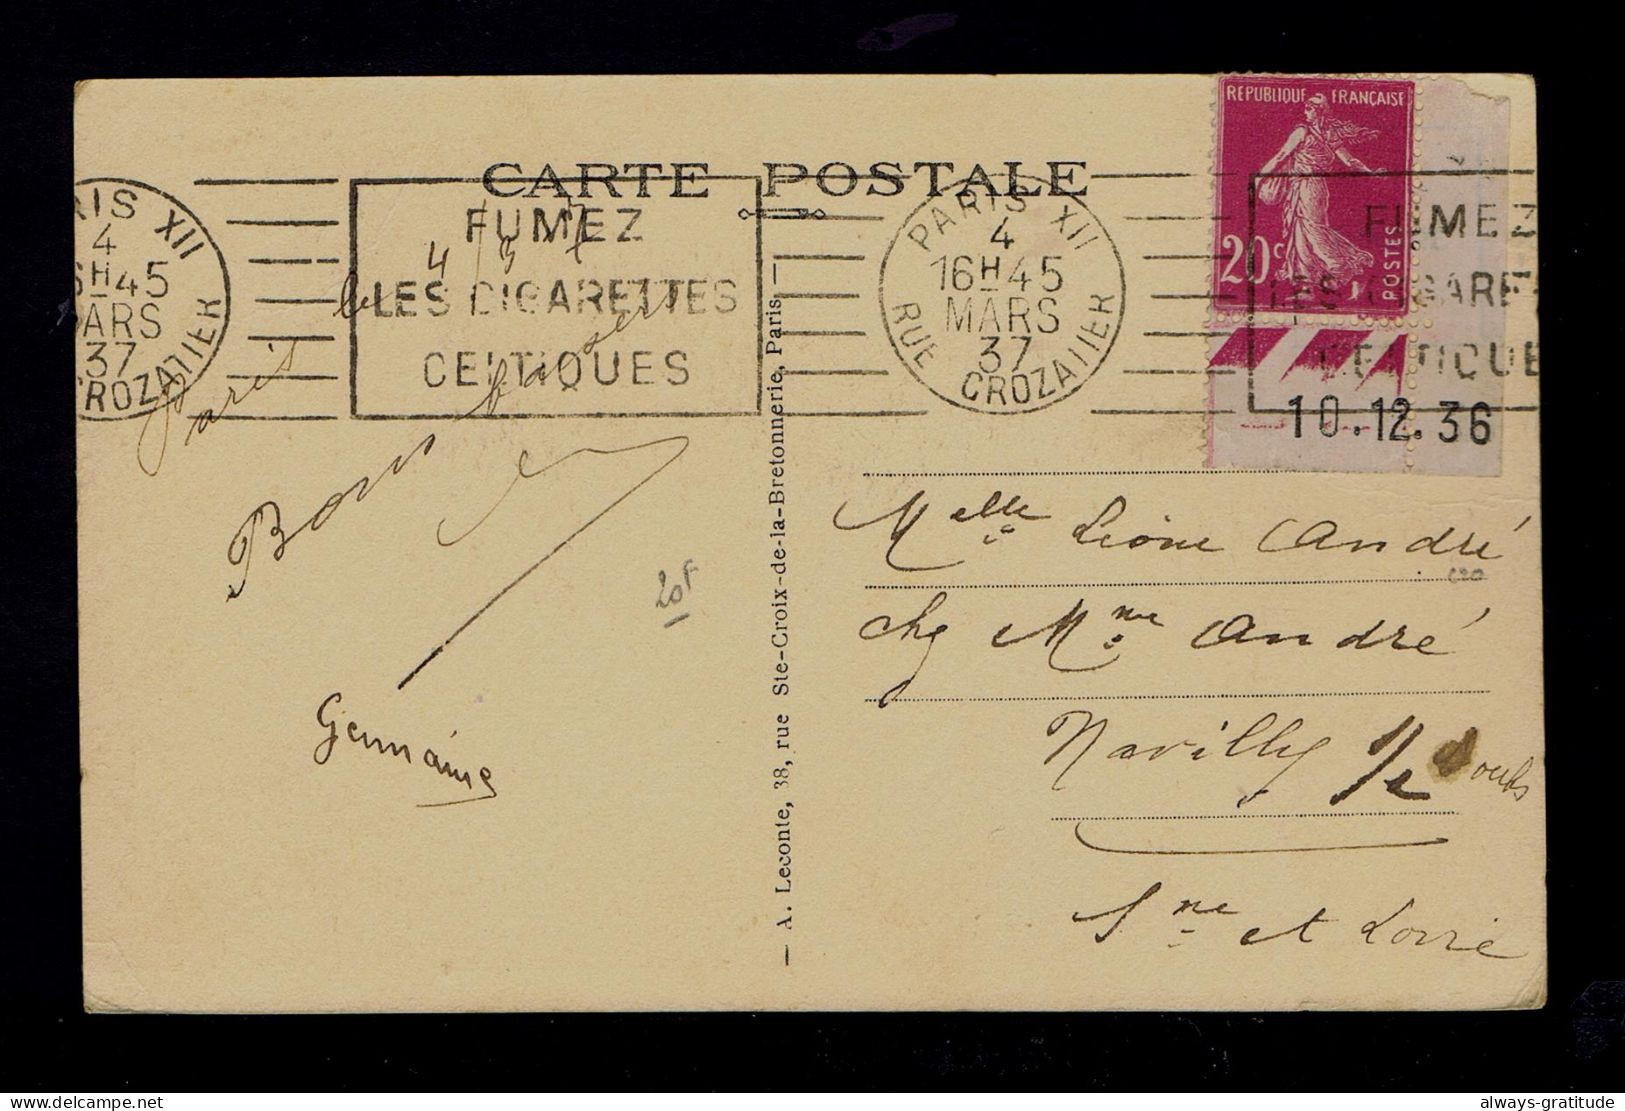 Sp10163 FRANCE Tabac Smoke Tobacco "fumes Les Cigarettes Celtiques" Mailed 1937 Slogan Pmk Postcard Paris »Navilly - Tabac